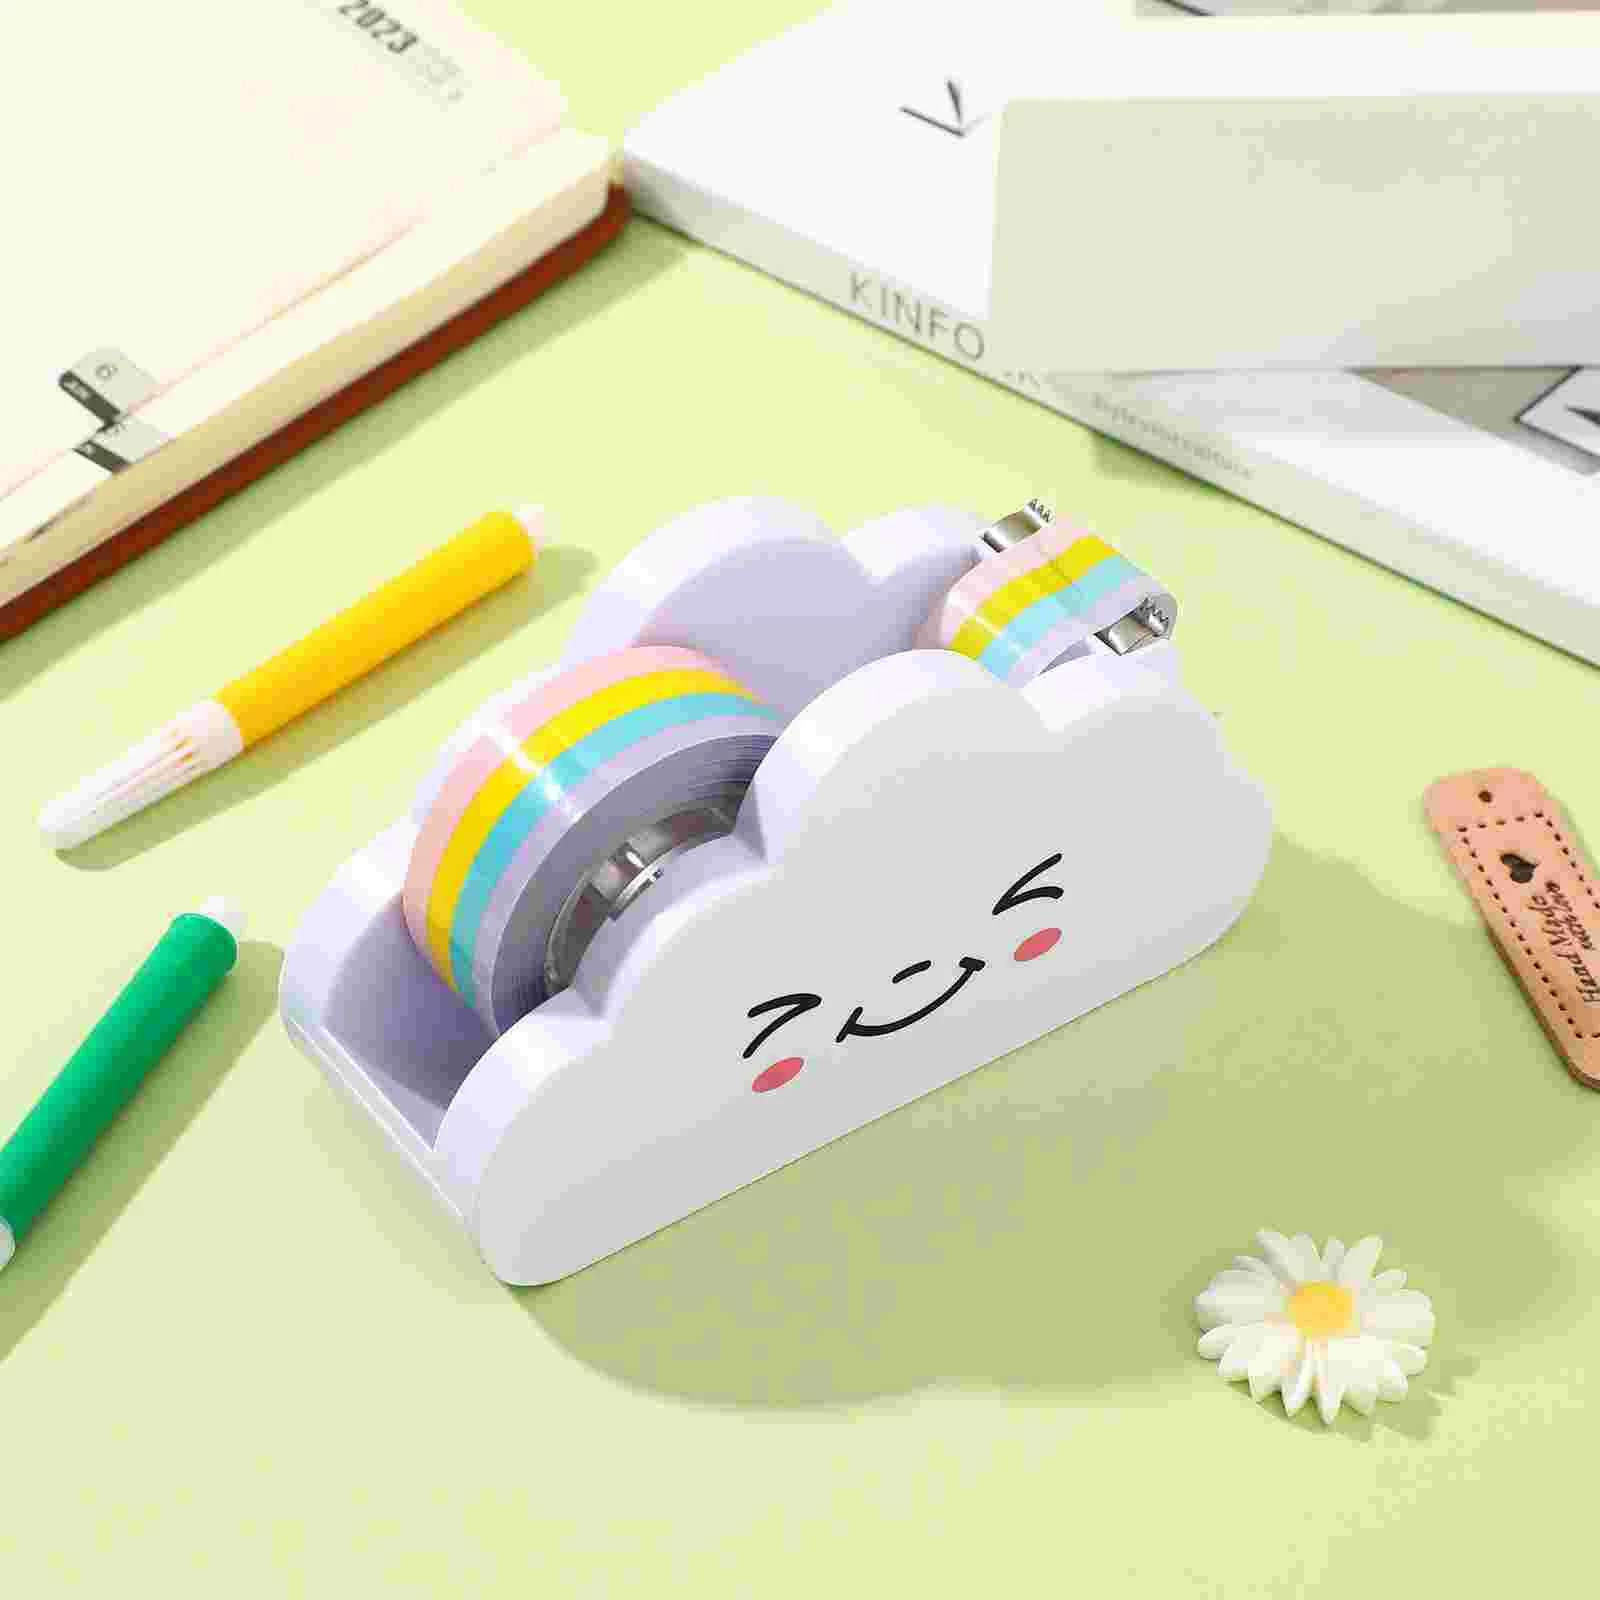 Tape Desktop Cloud Washi Tape Dispenser Desk Cute White Desktop Stationery Fun Rainbow Slicer Cutting Tool Plastic Kids Office